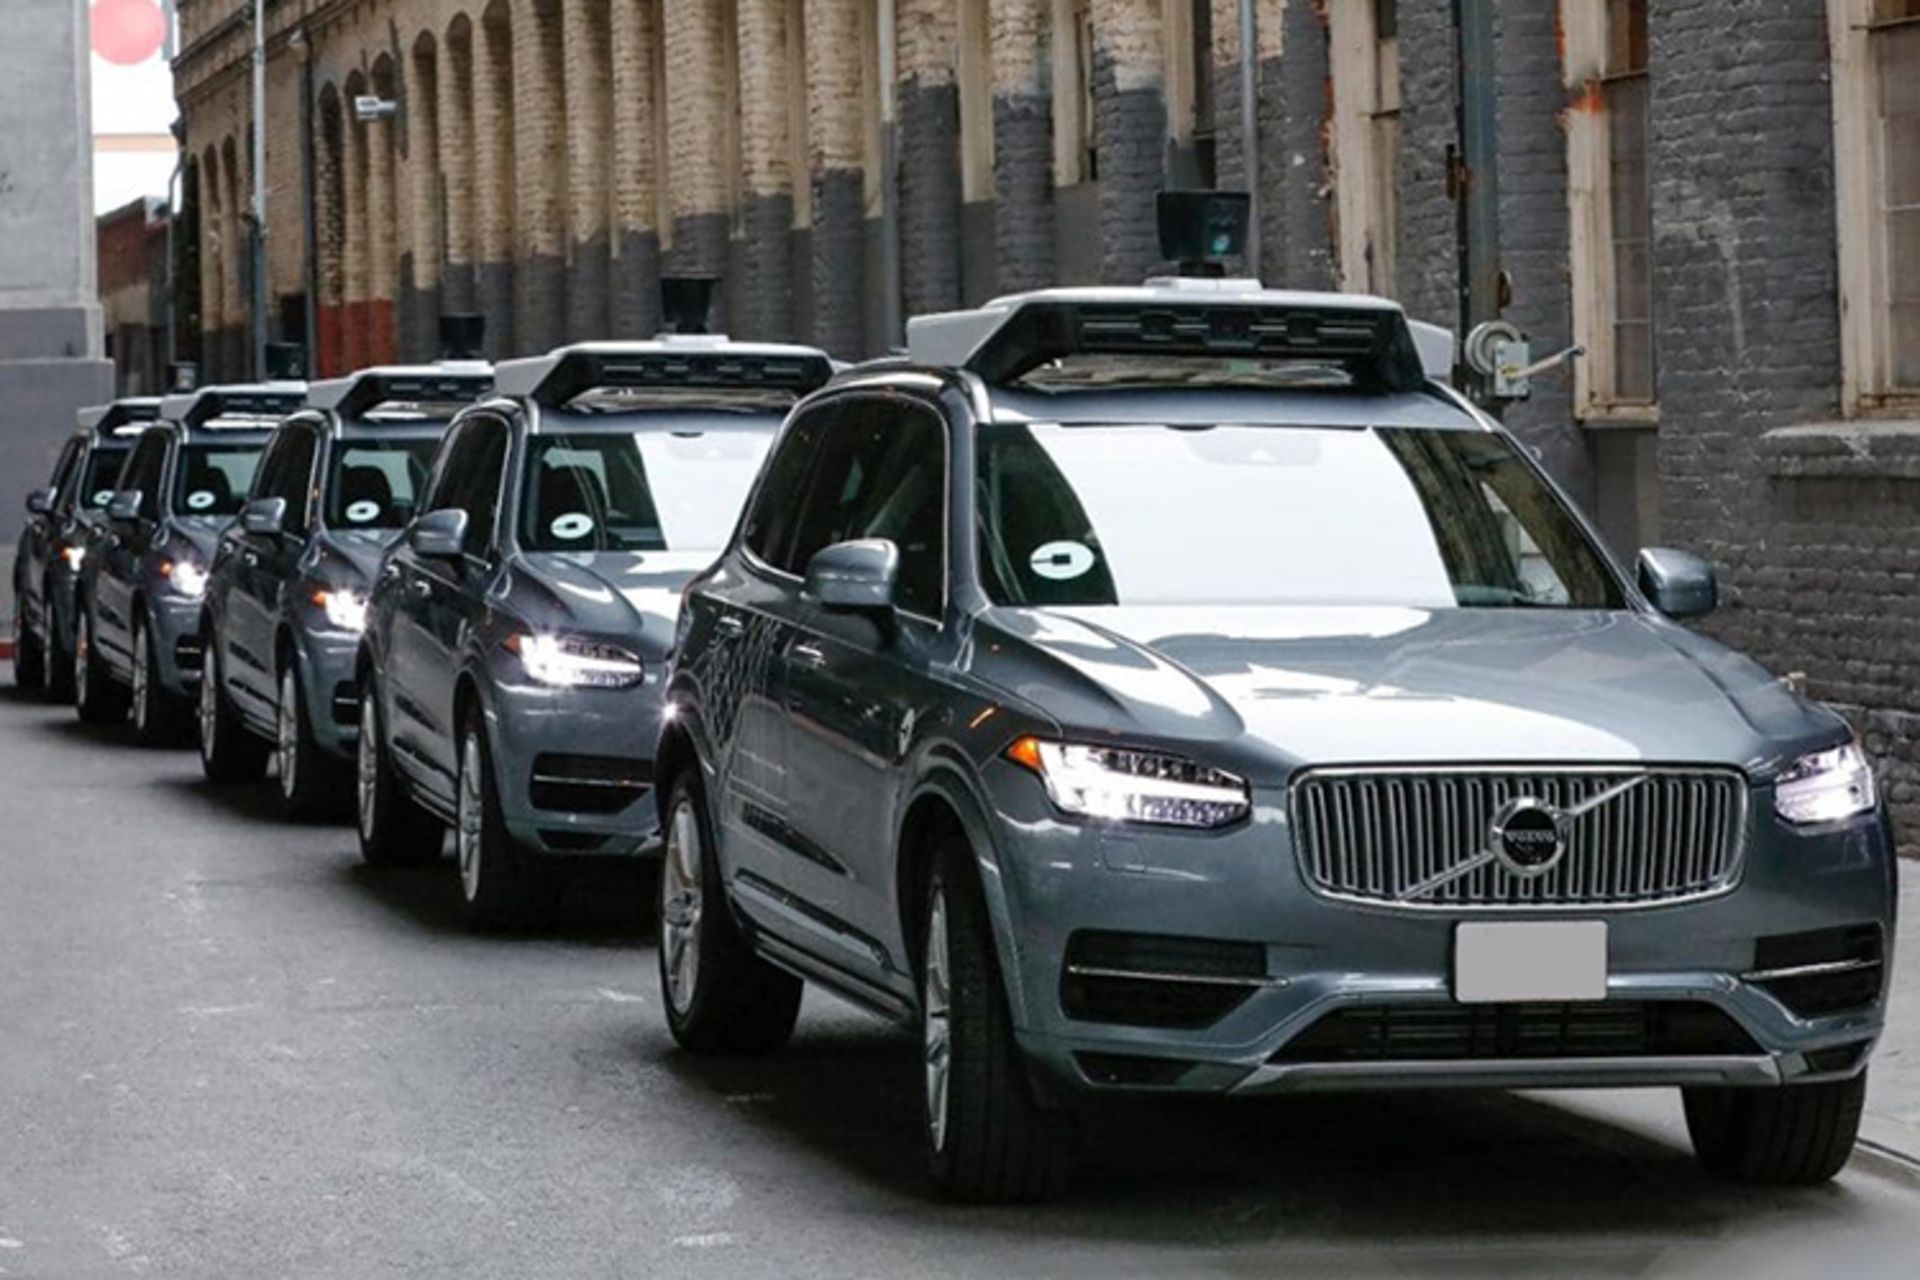 Uber self-driving SUV